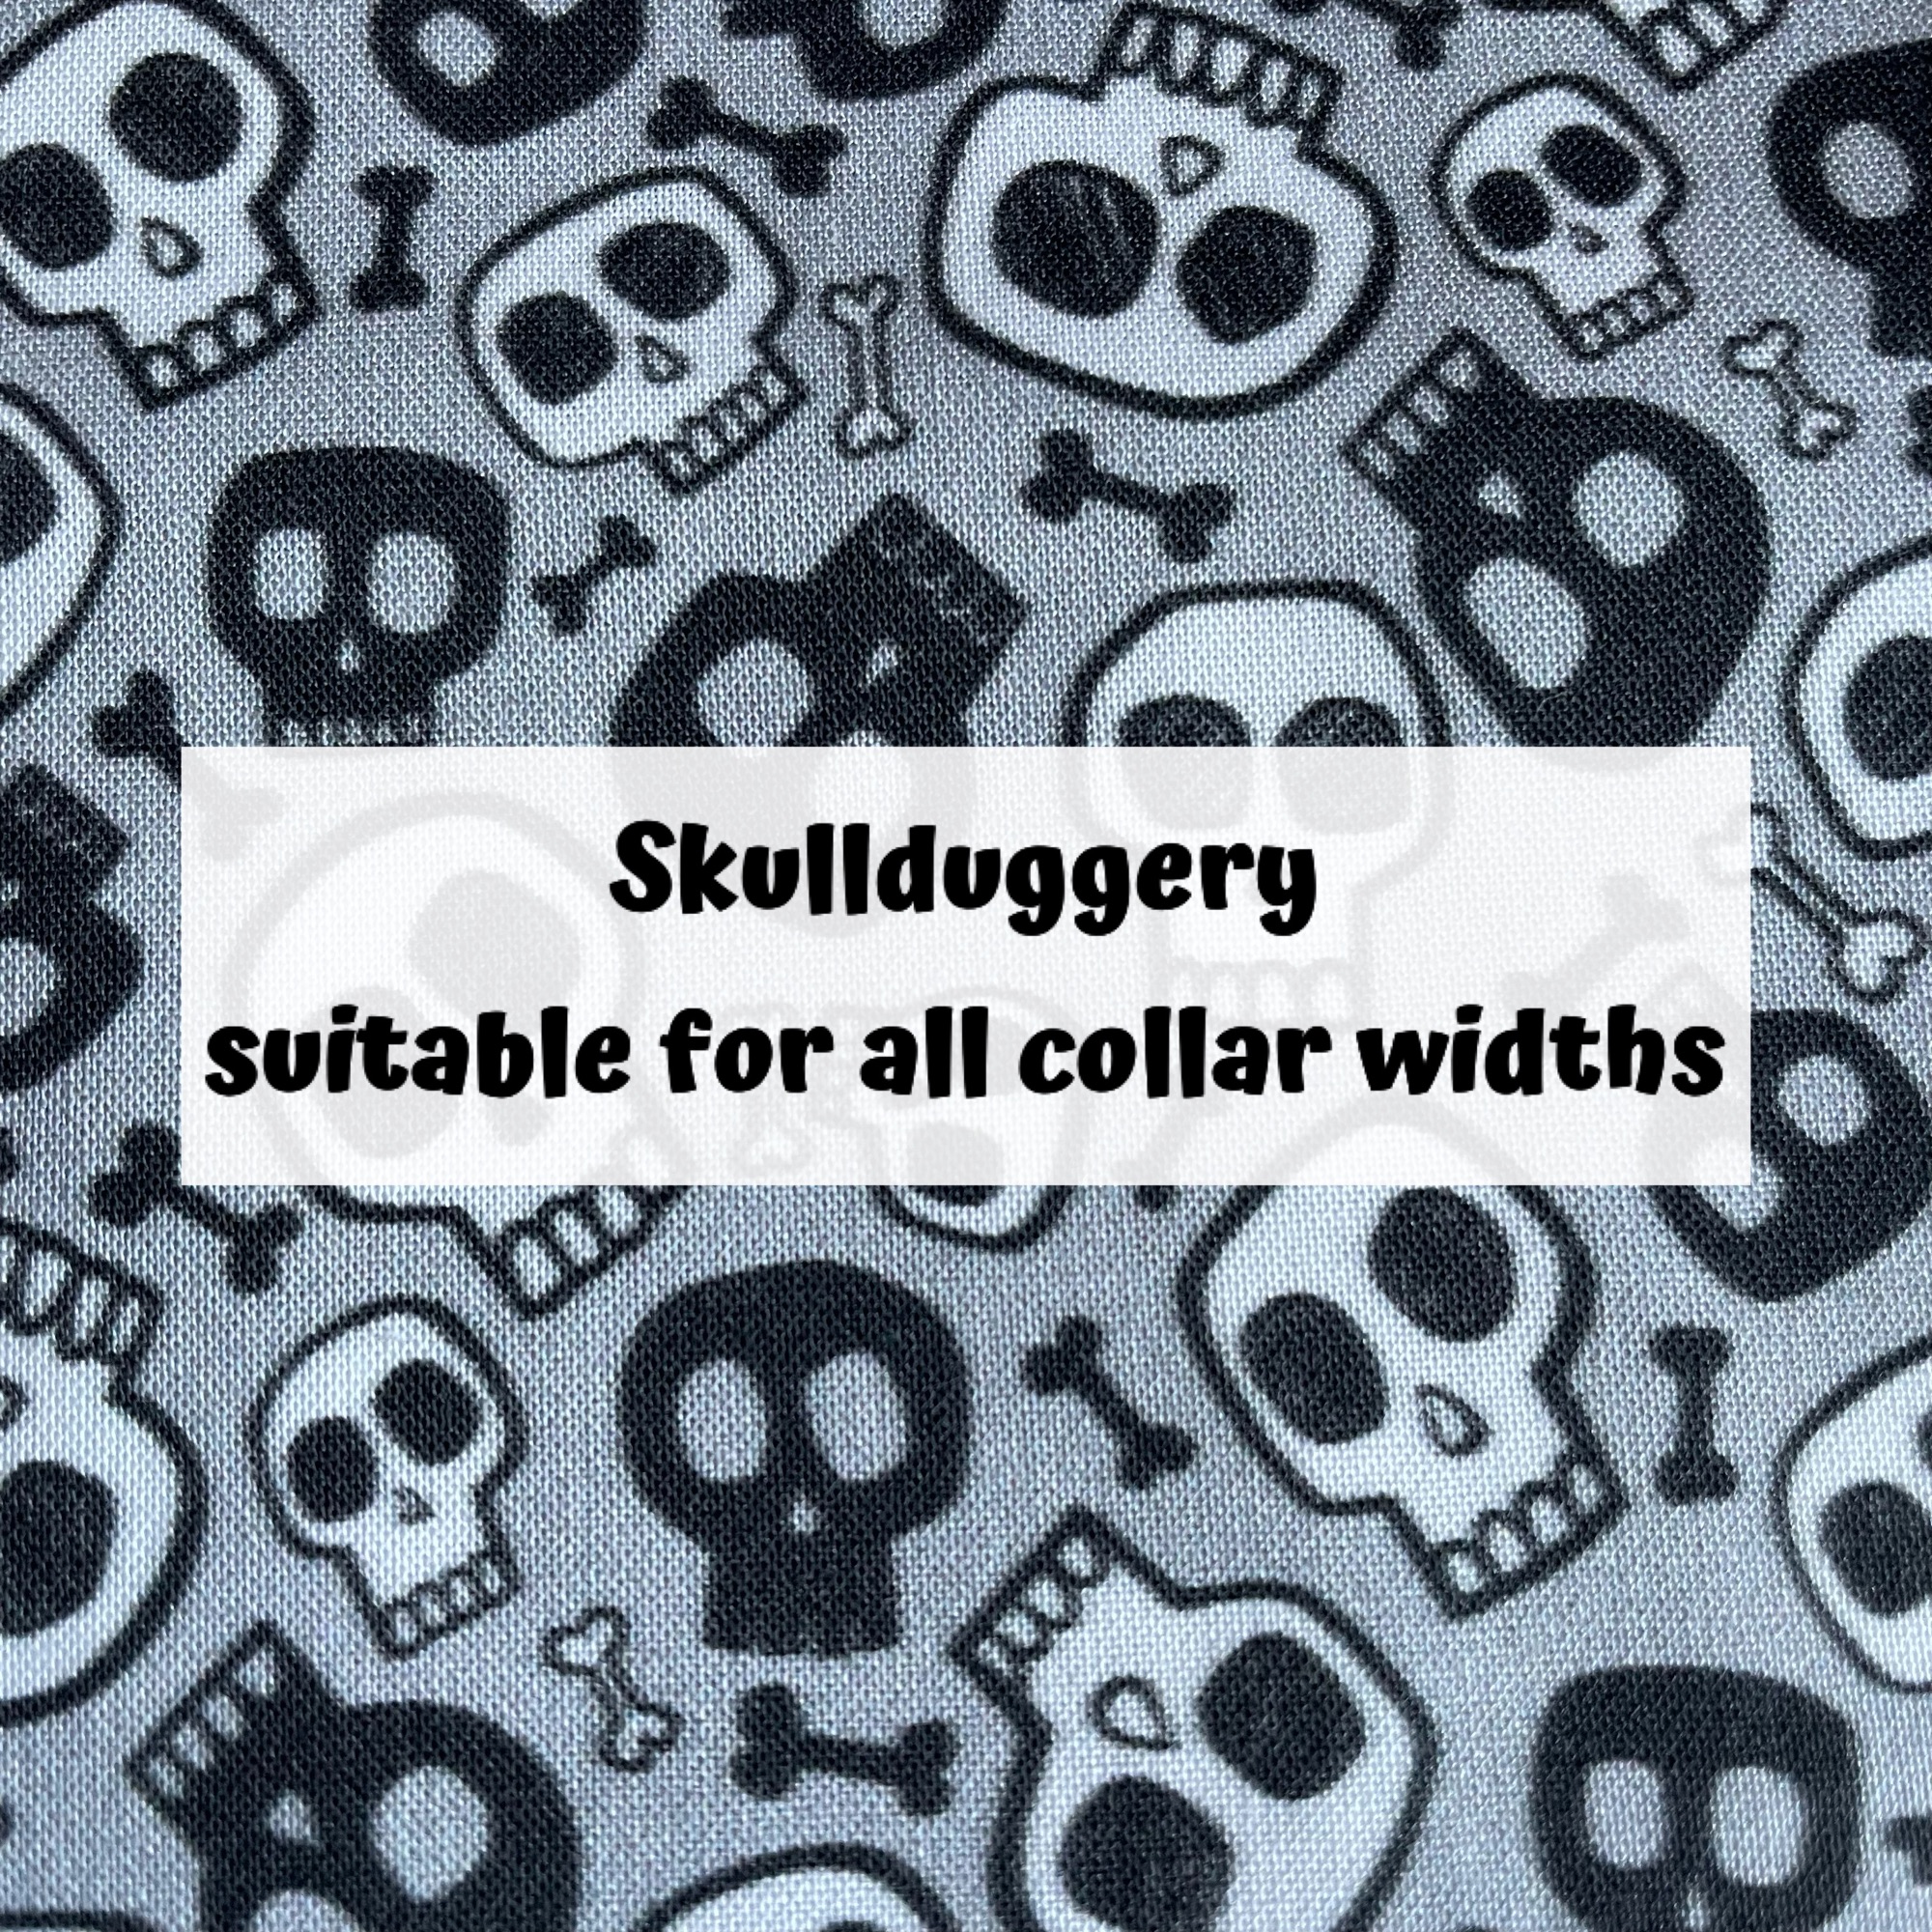 Skullduggery